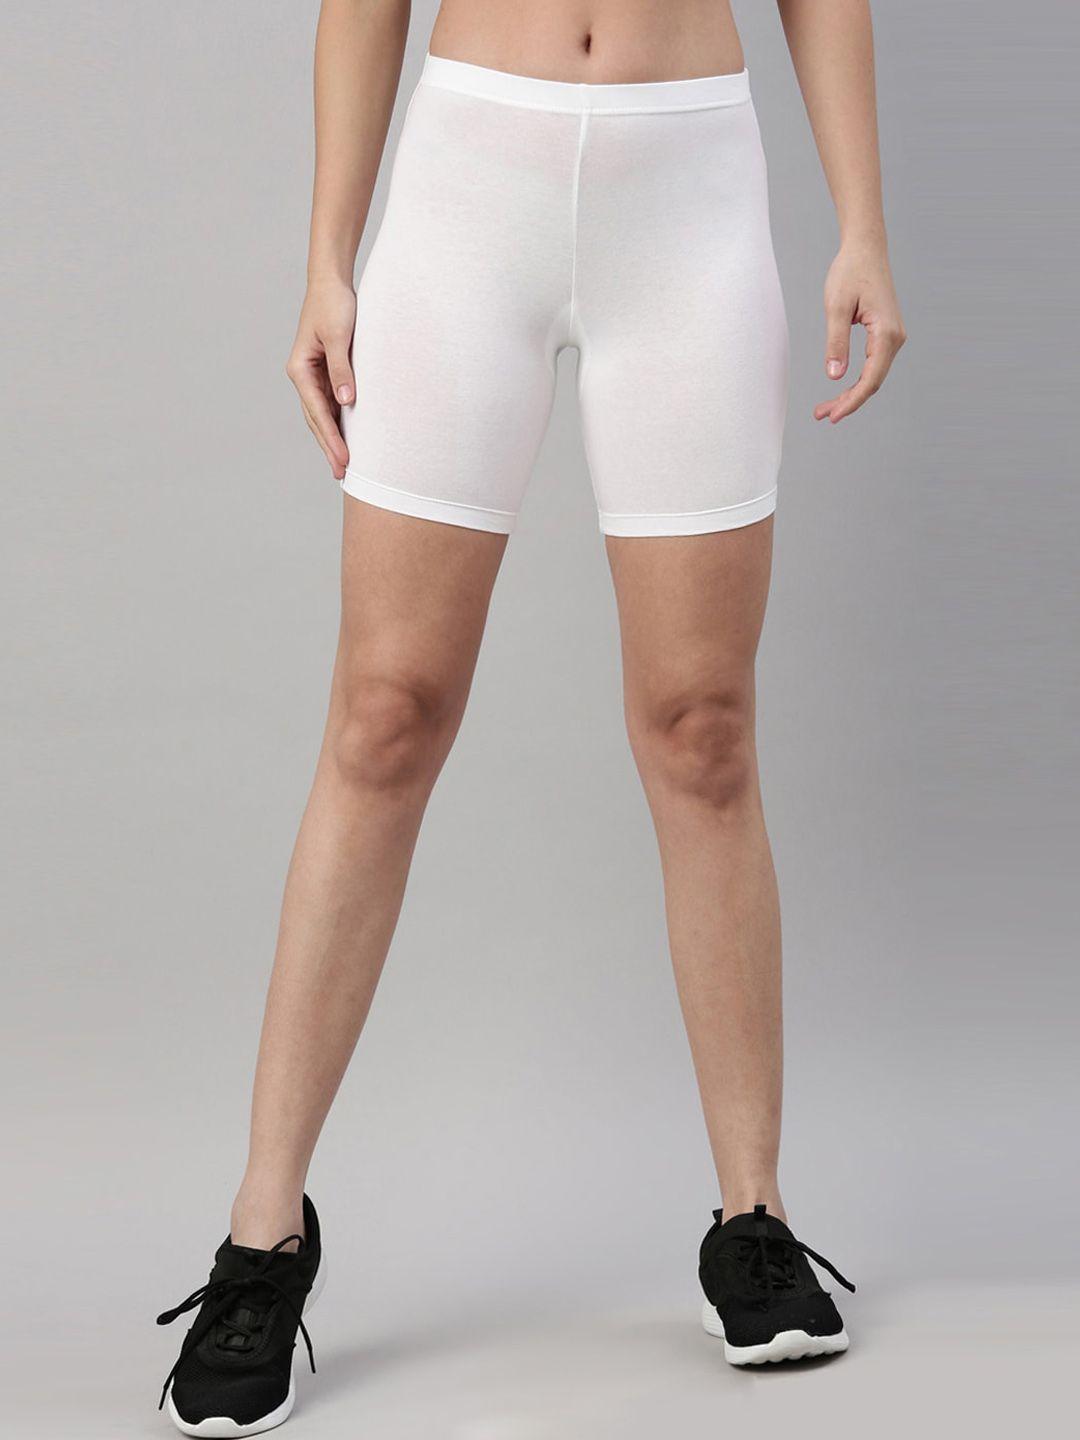 twin-birds-women-slim-fit-pure-cotton-sports-shorts